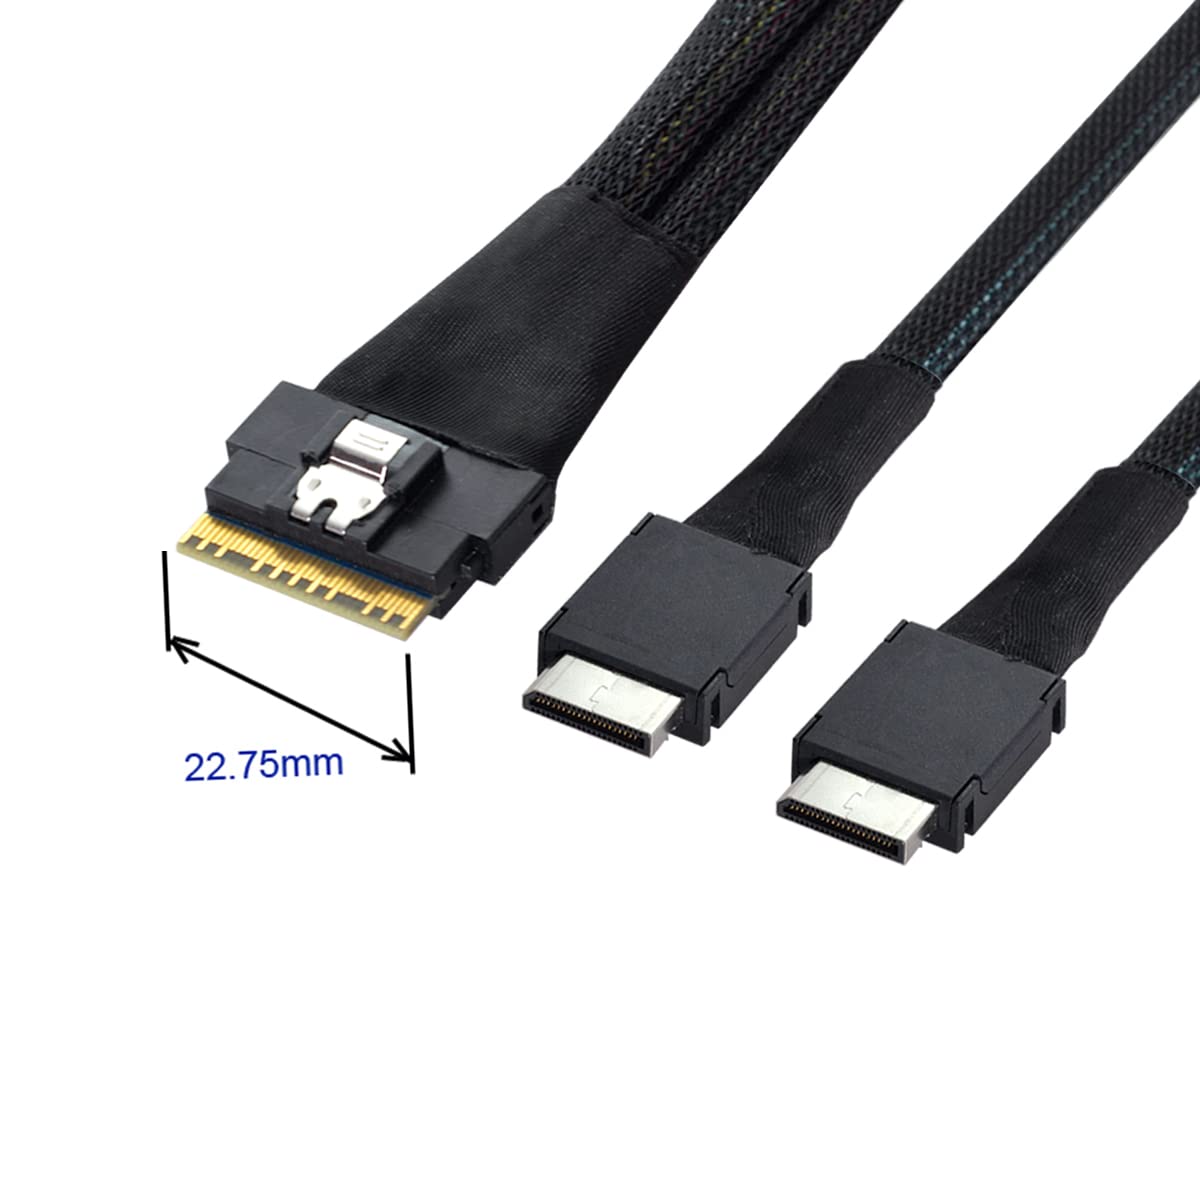 PCI-E Ultraport Slimline SAS Slim 4.0 SFF-8654 8i 74pin to Dual Oculink SFF-8611 Cable 0.5m